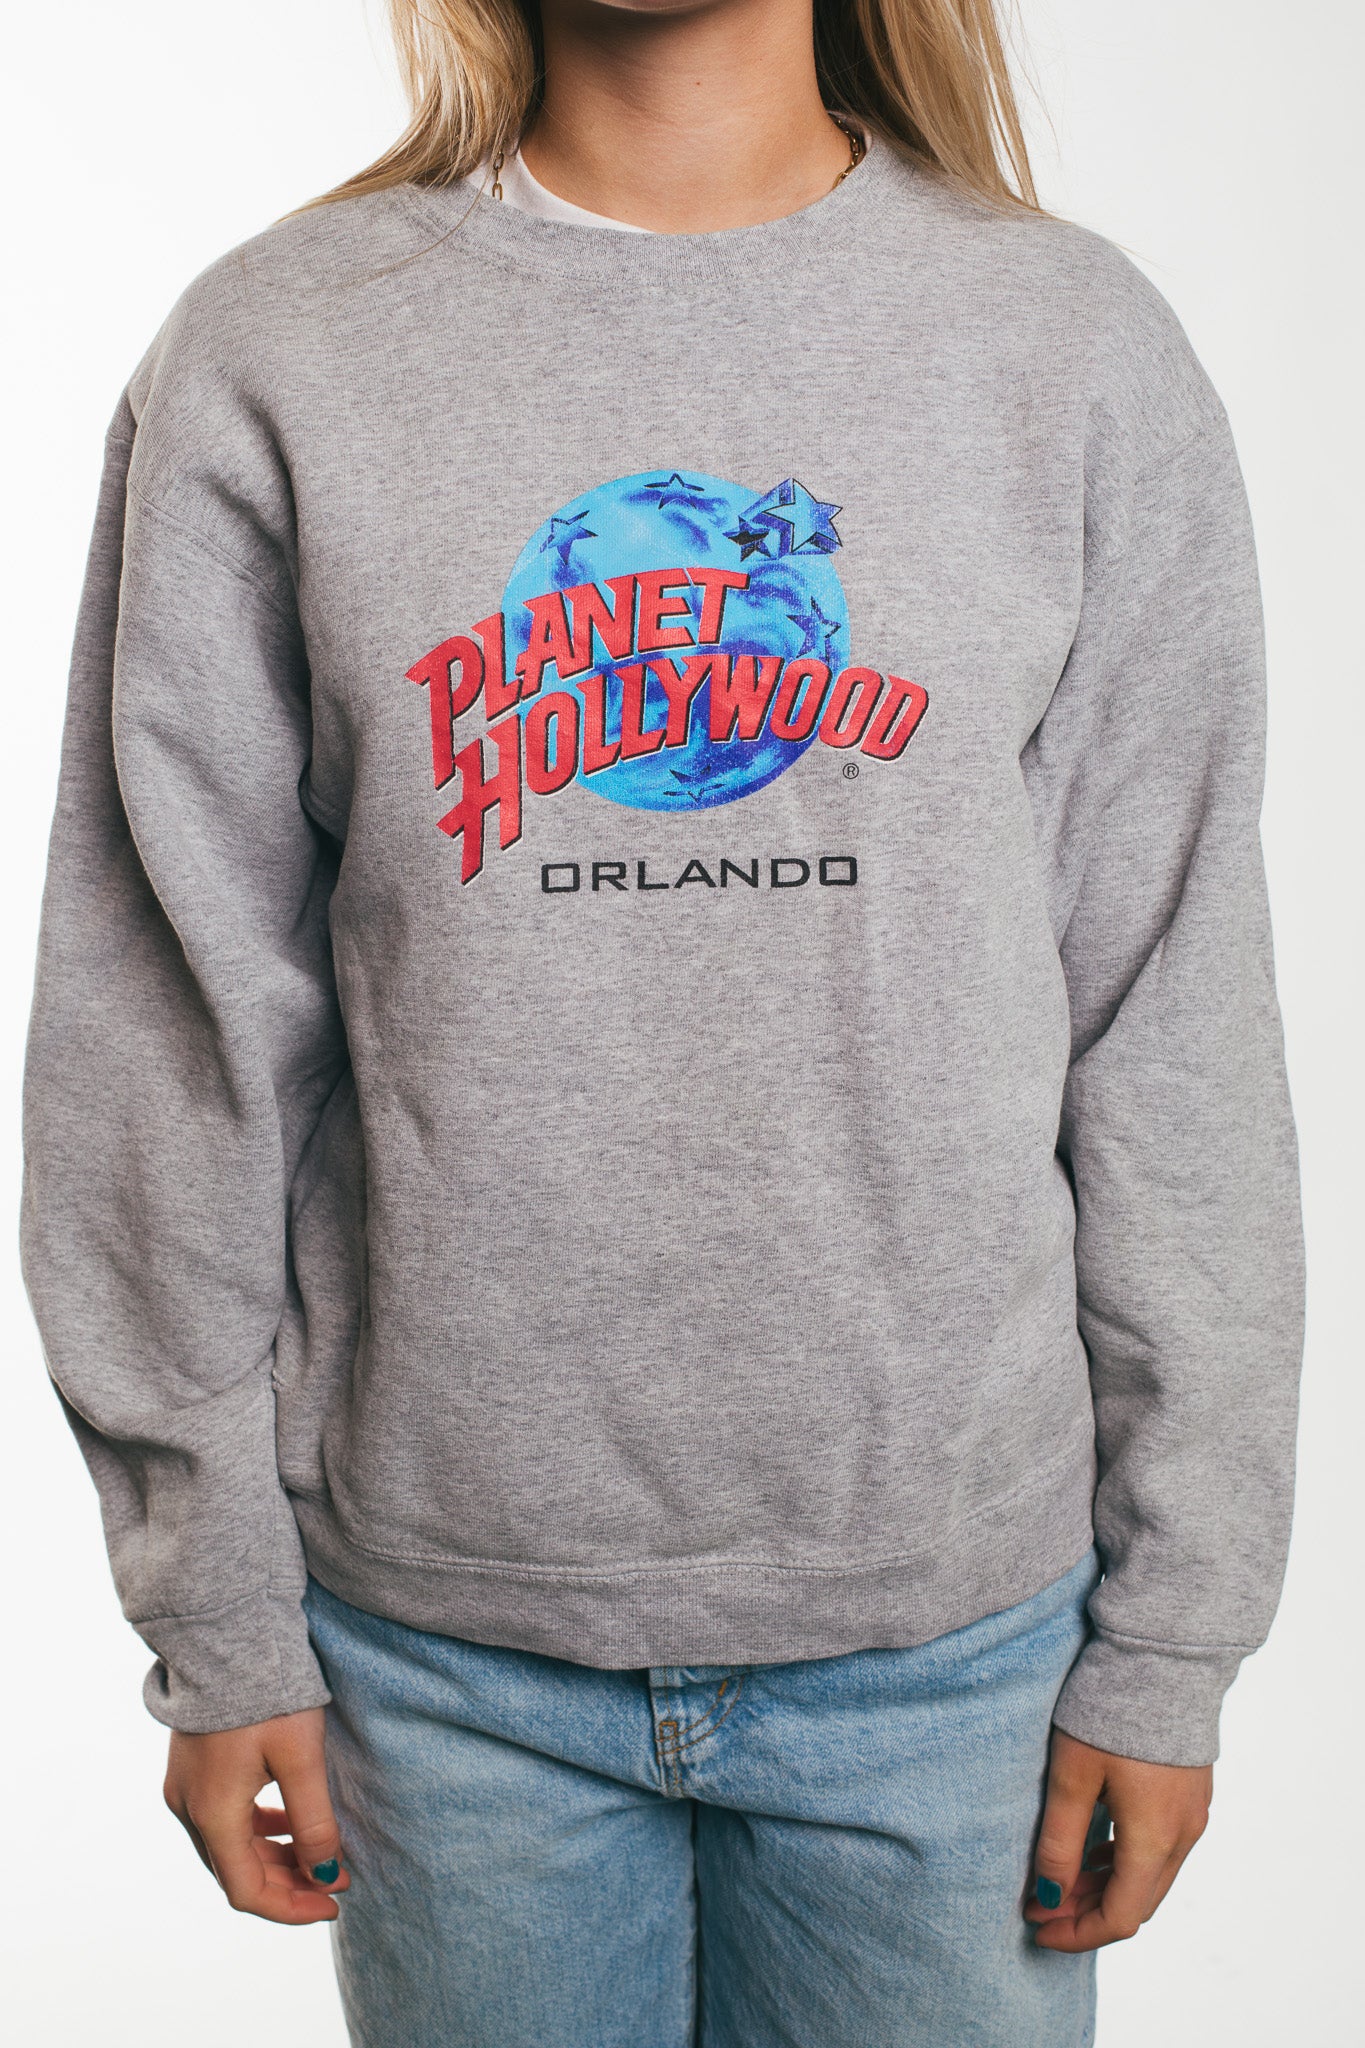 Planet Hollywood - Sweatshirt (S)